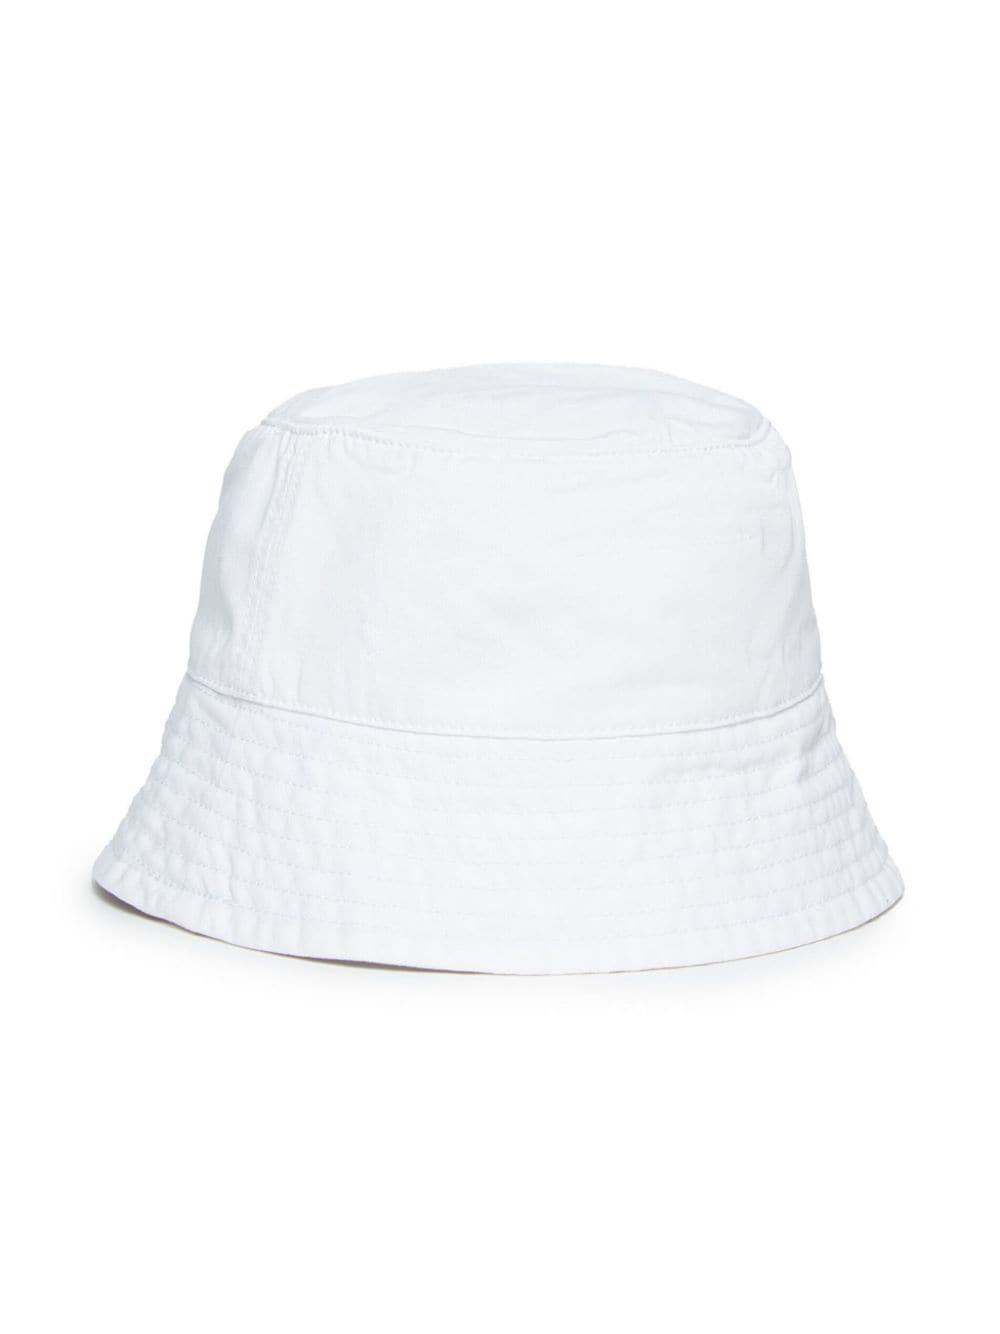 Cappello bianco per bambina con logo